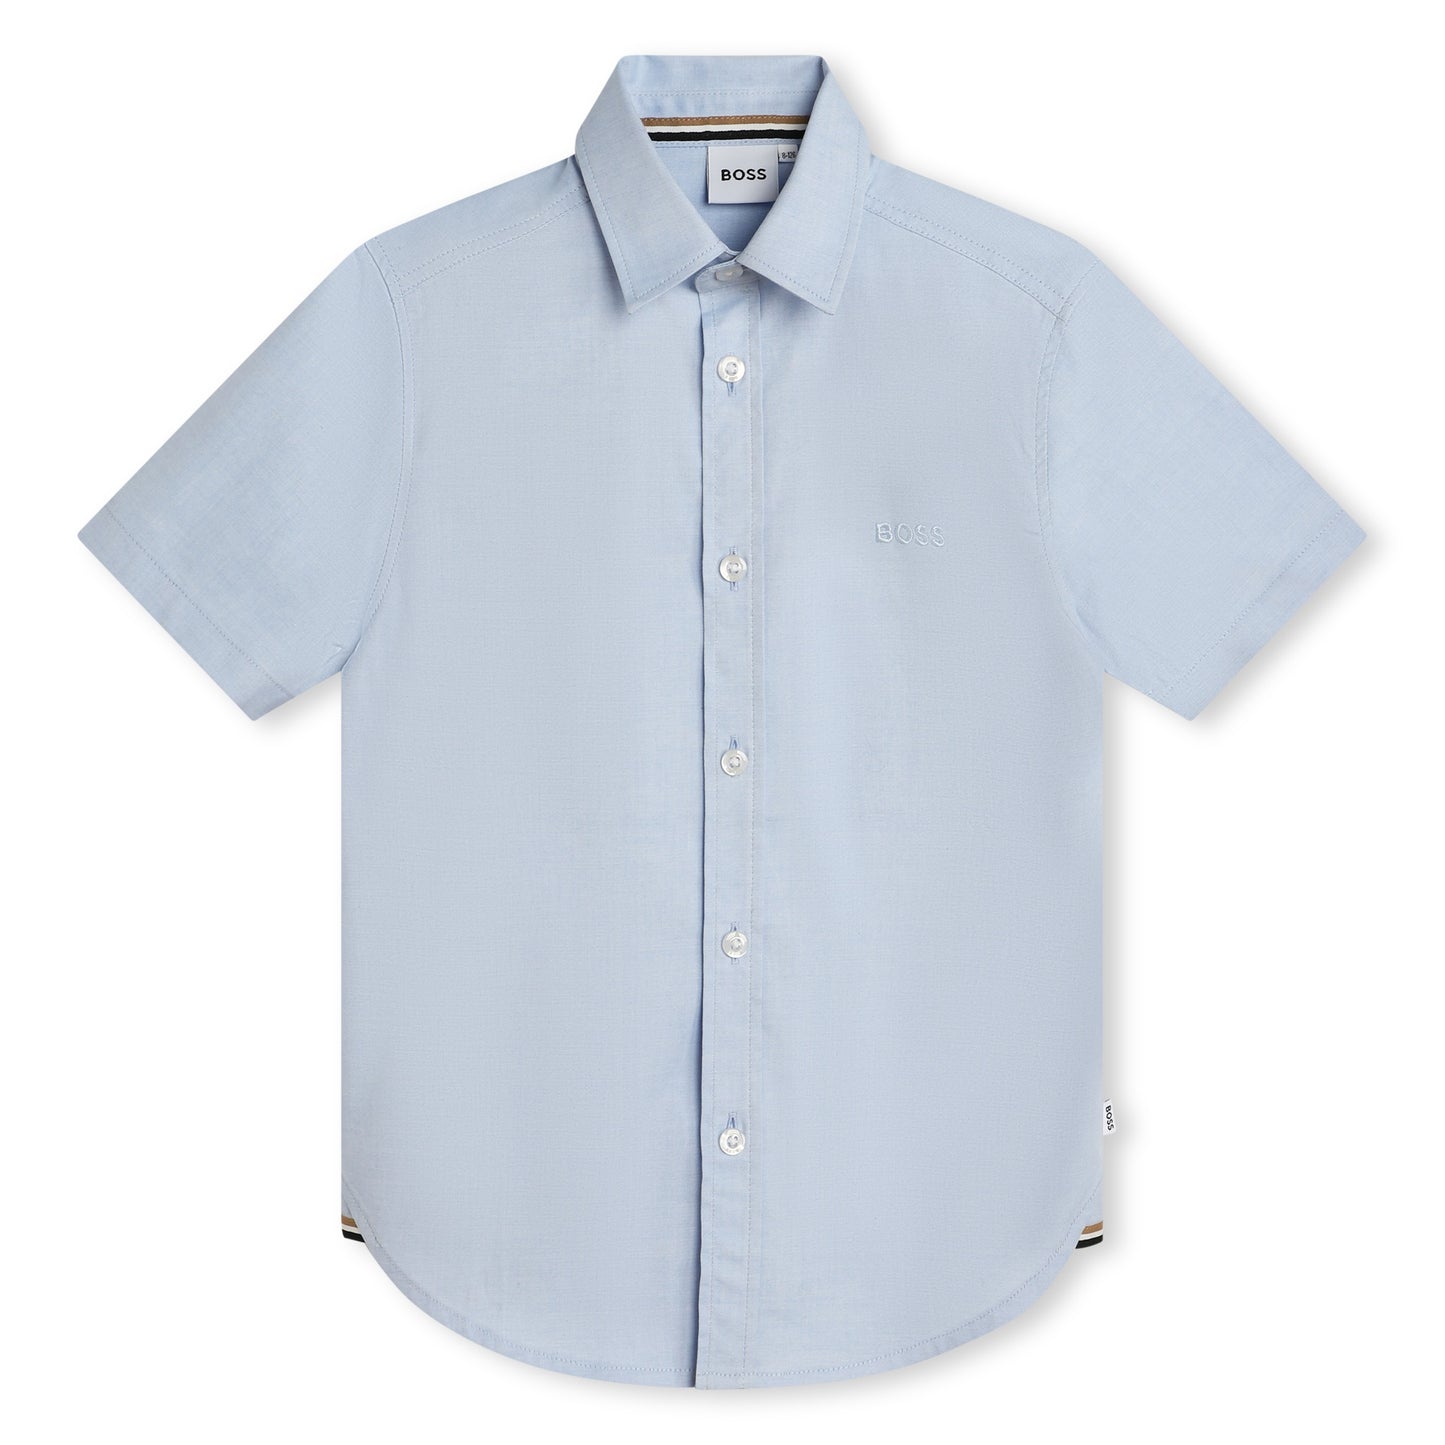 Hugo Boss Boys Short Sleeve Pale Blue Oxford Dress Shirt _ J50696-77D